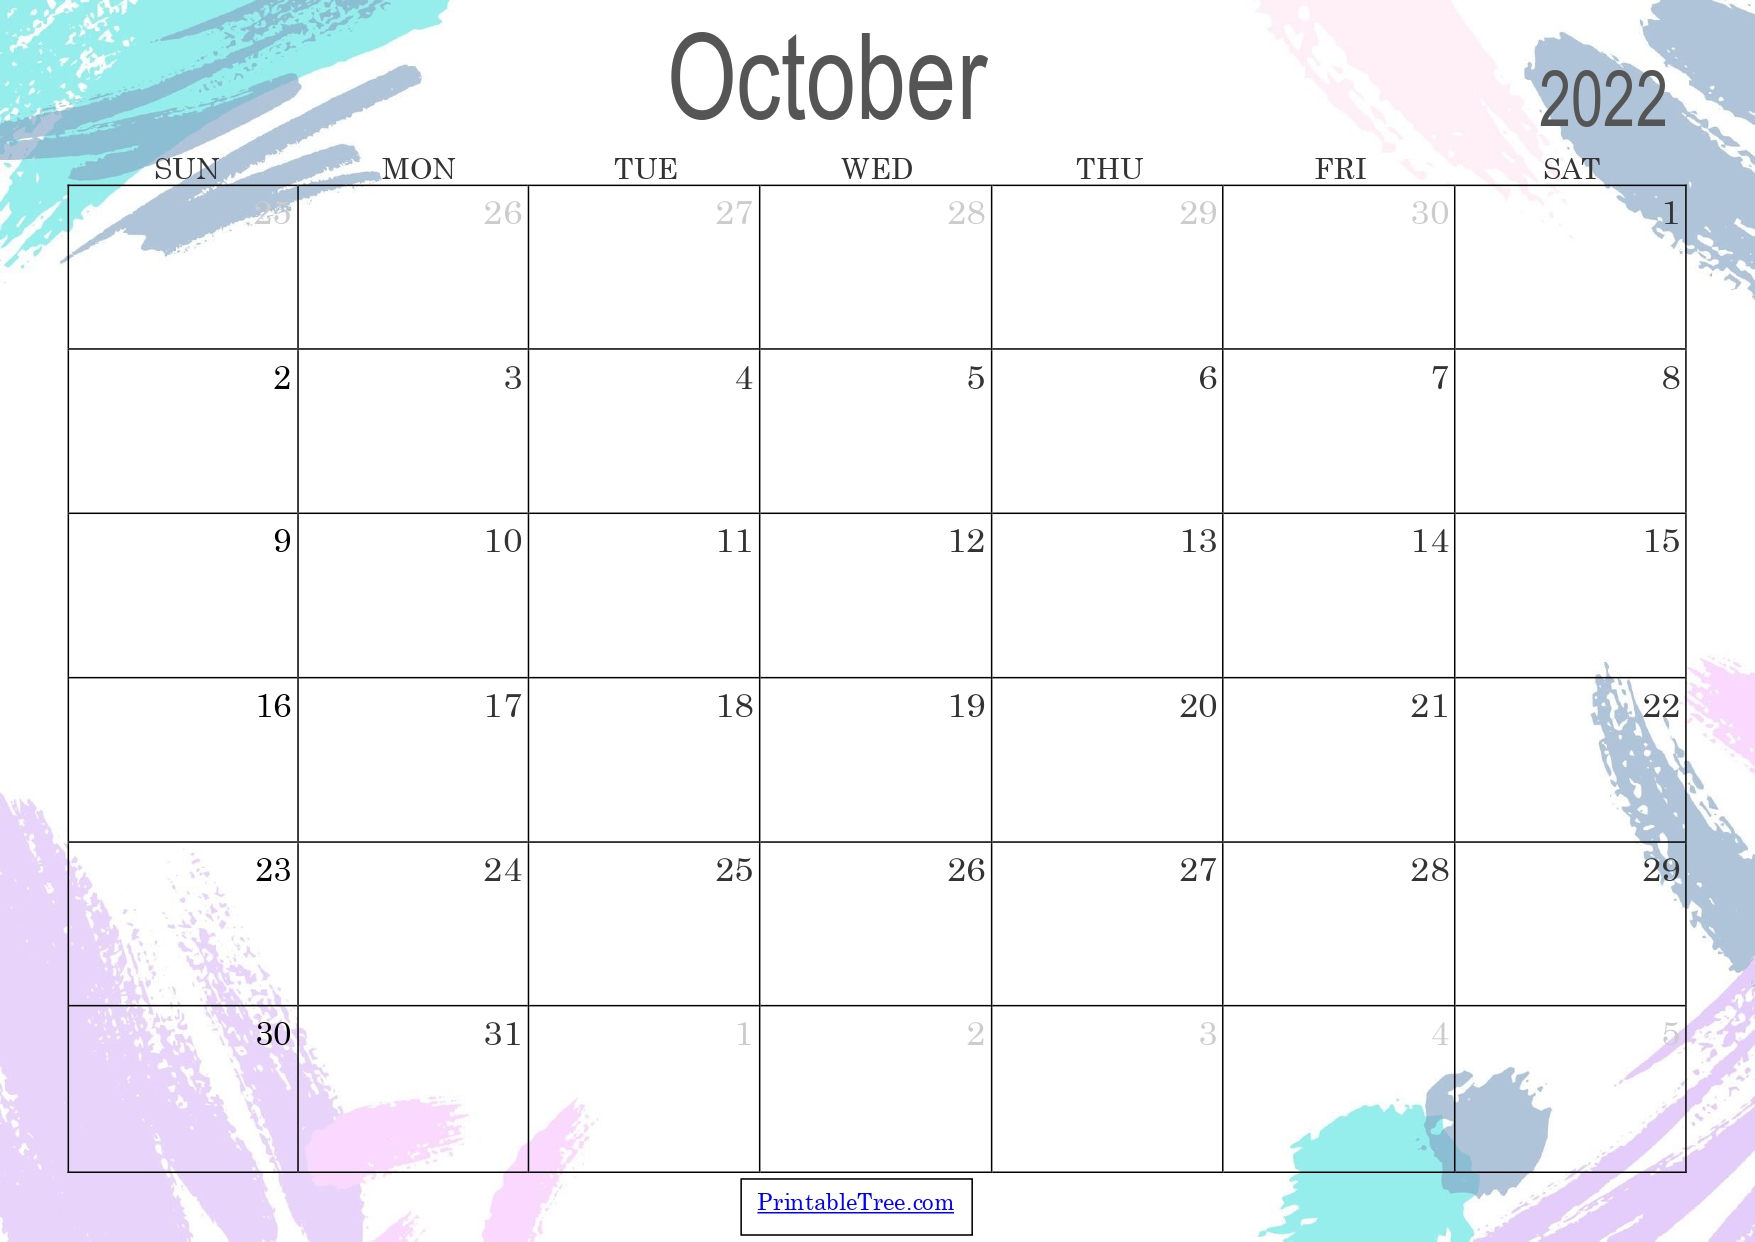 October 2022 Free Printable Calendar October 2022 Calendar Printable Pdf Free Templates With Holidays